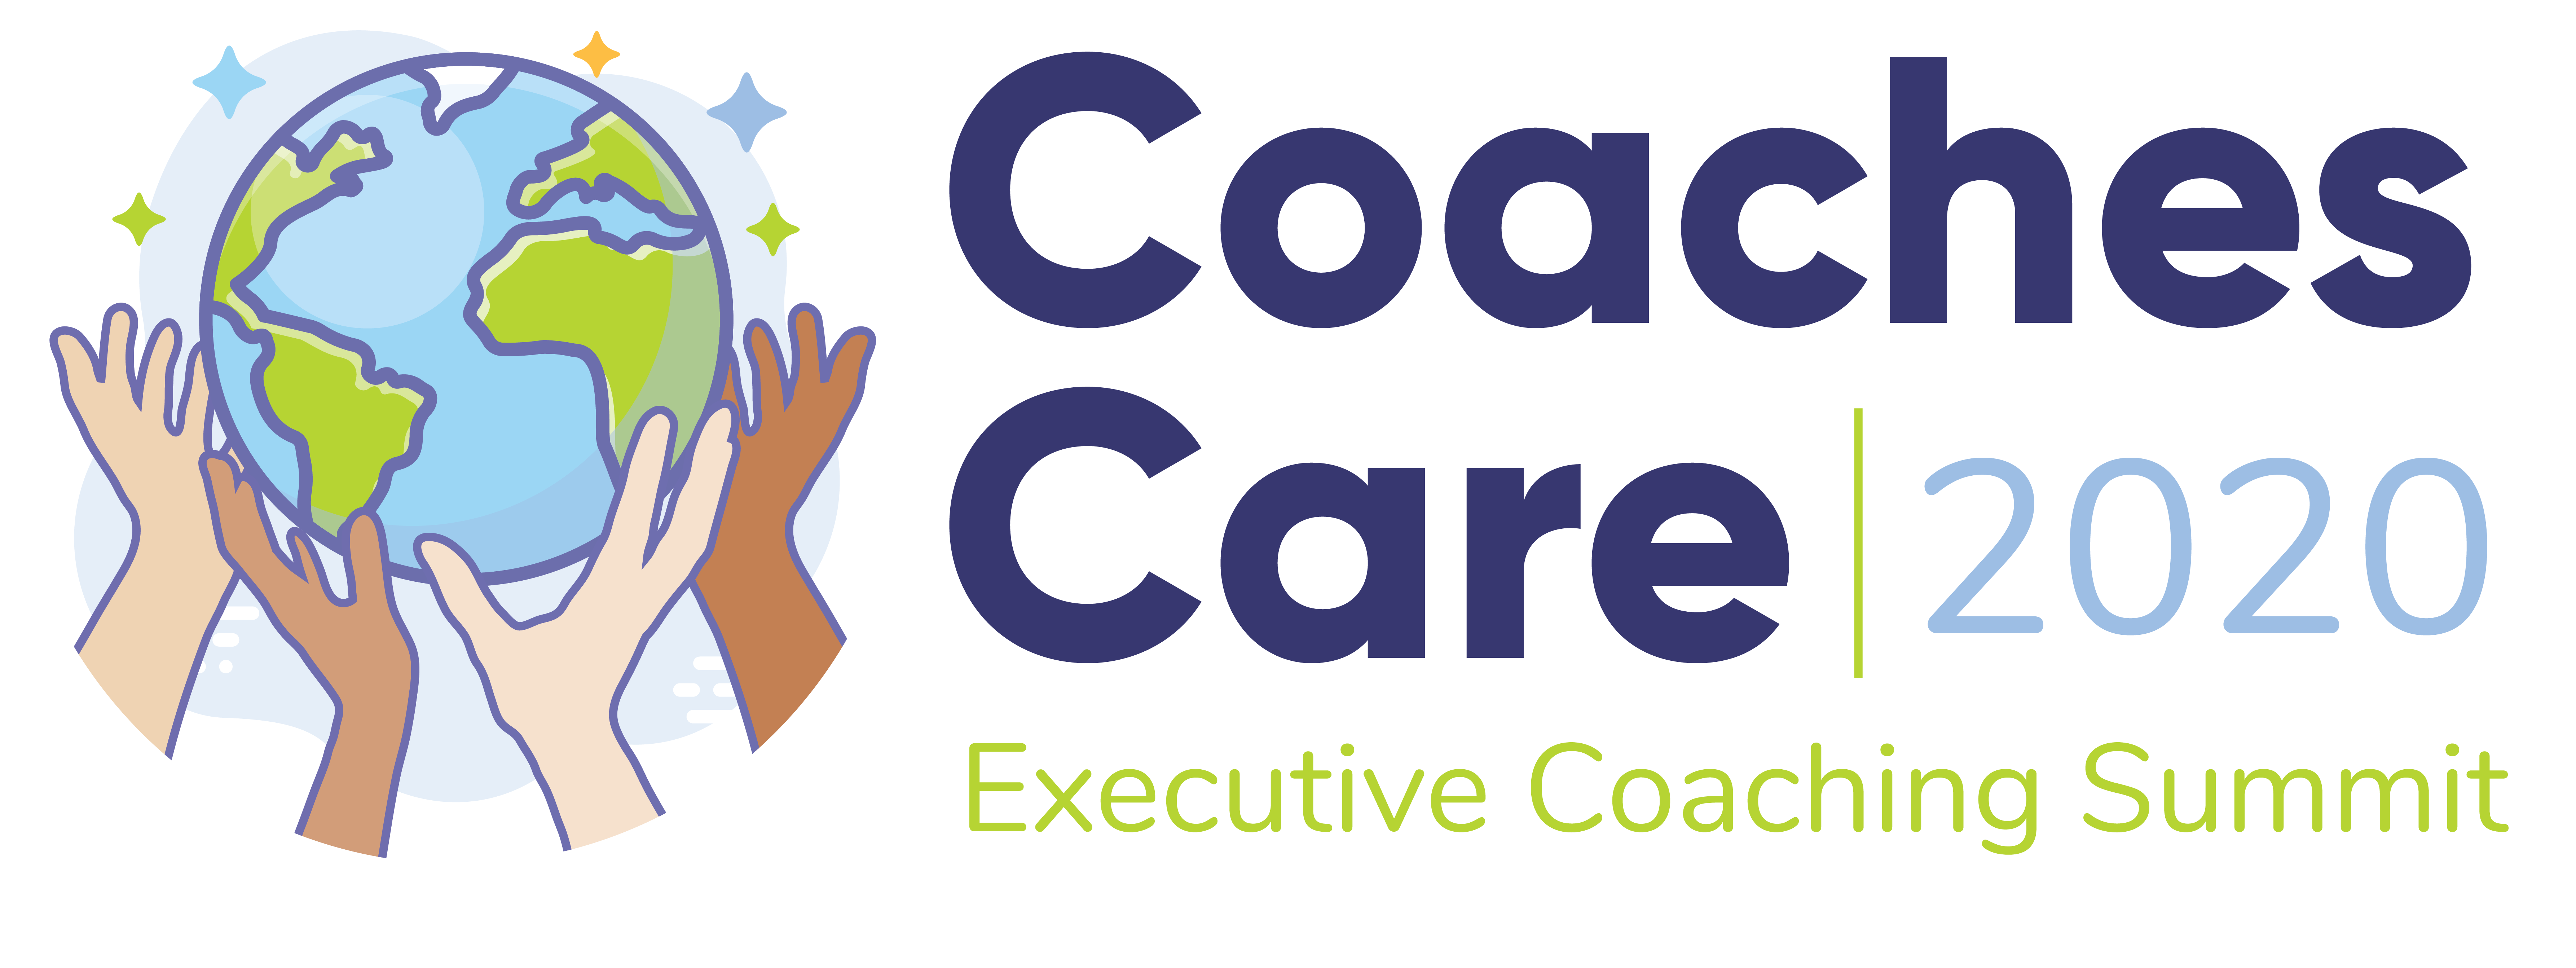 Coaches Care 2020